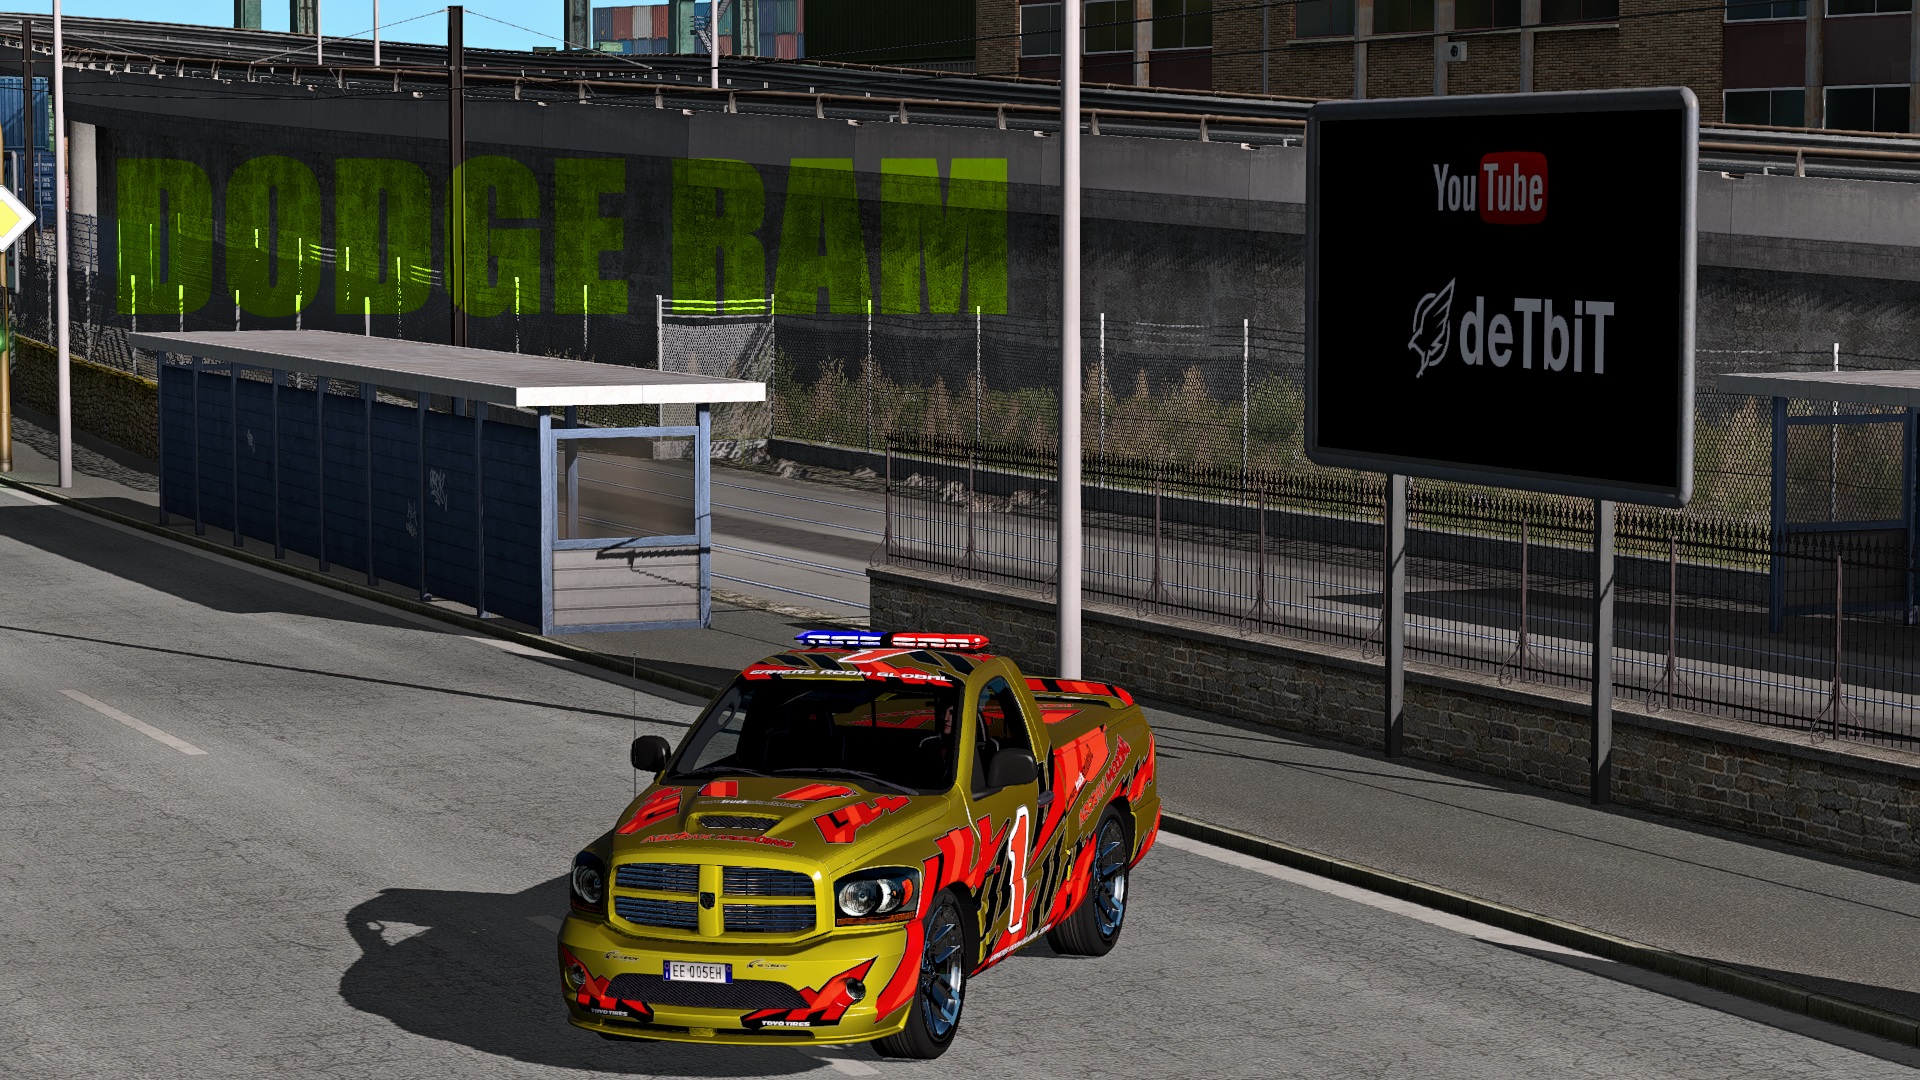 euro truck simulator 2 dealerships